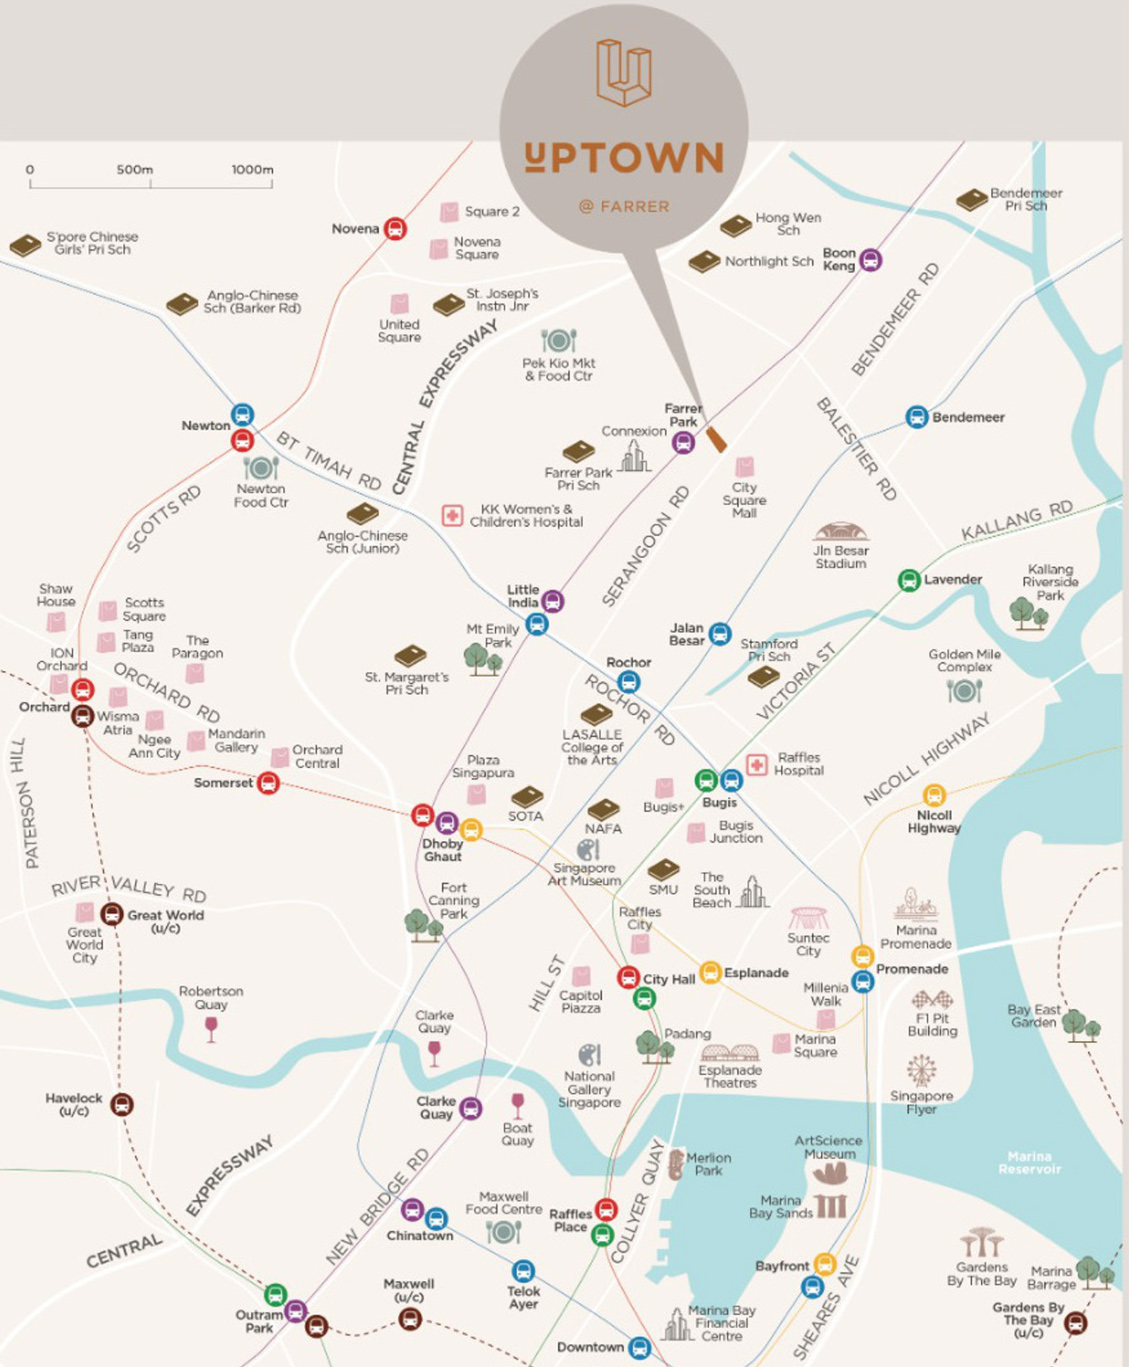 Uptown-@-Farrer-new-condo-singapore-location-map